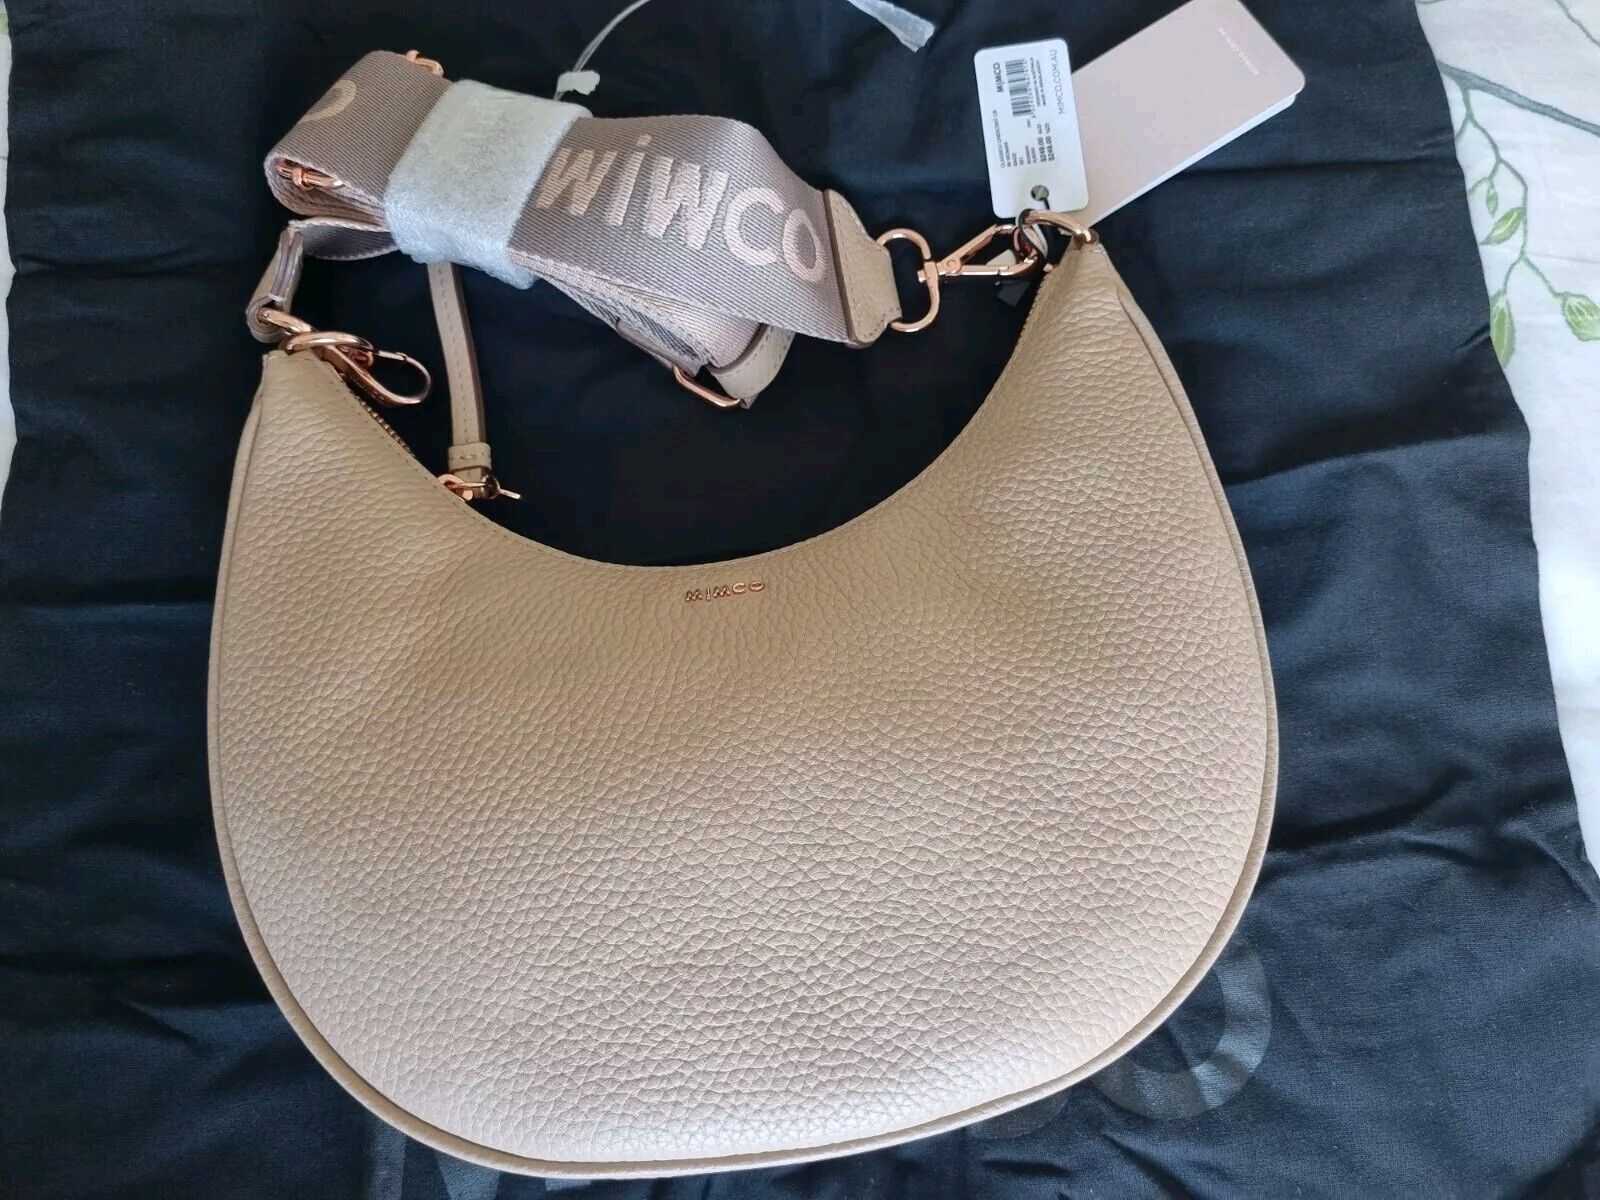  New Mimco Crecent Cross Body Bag